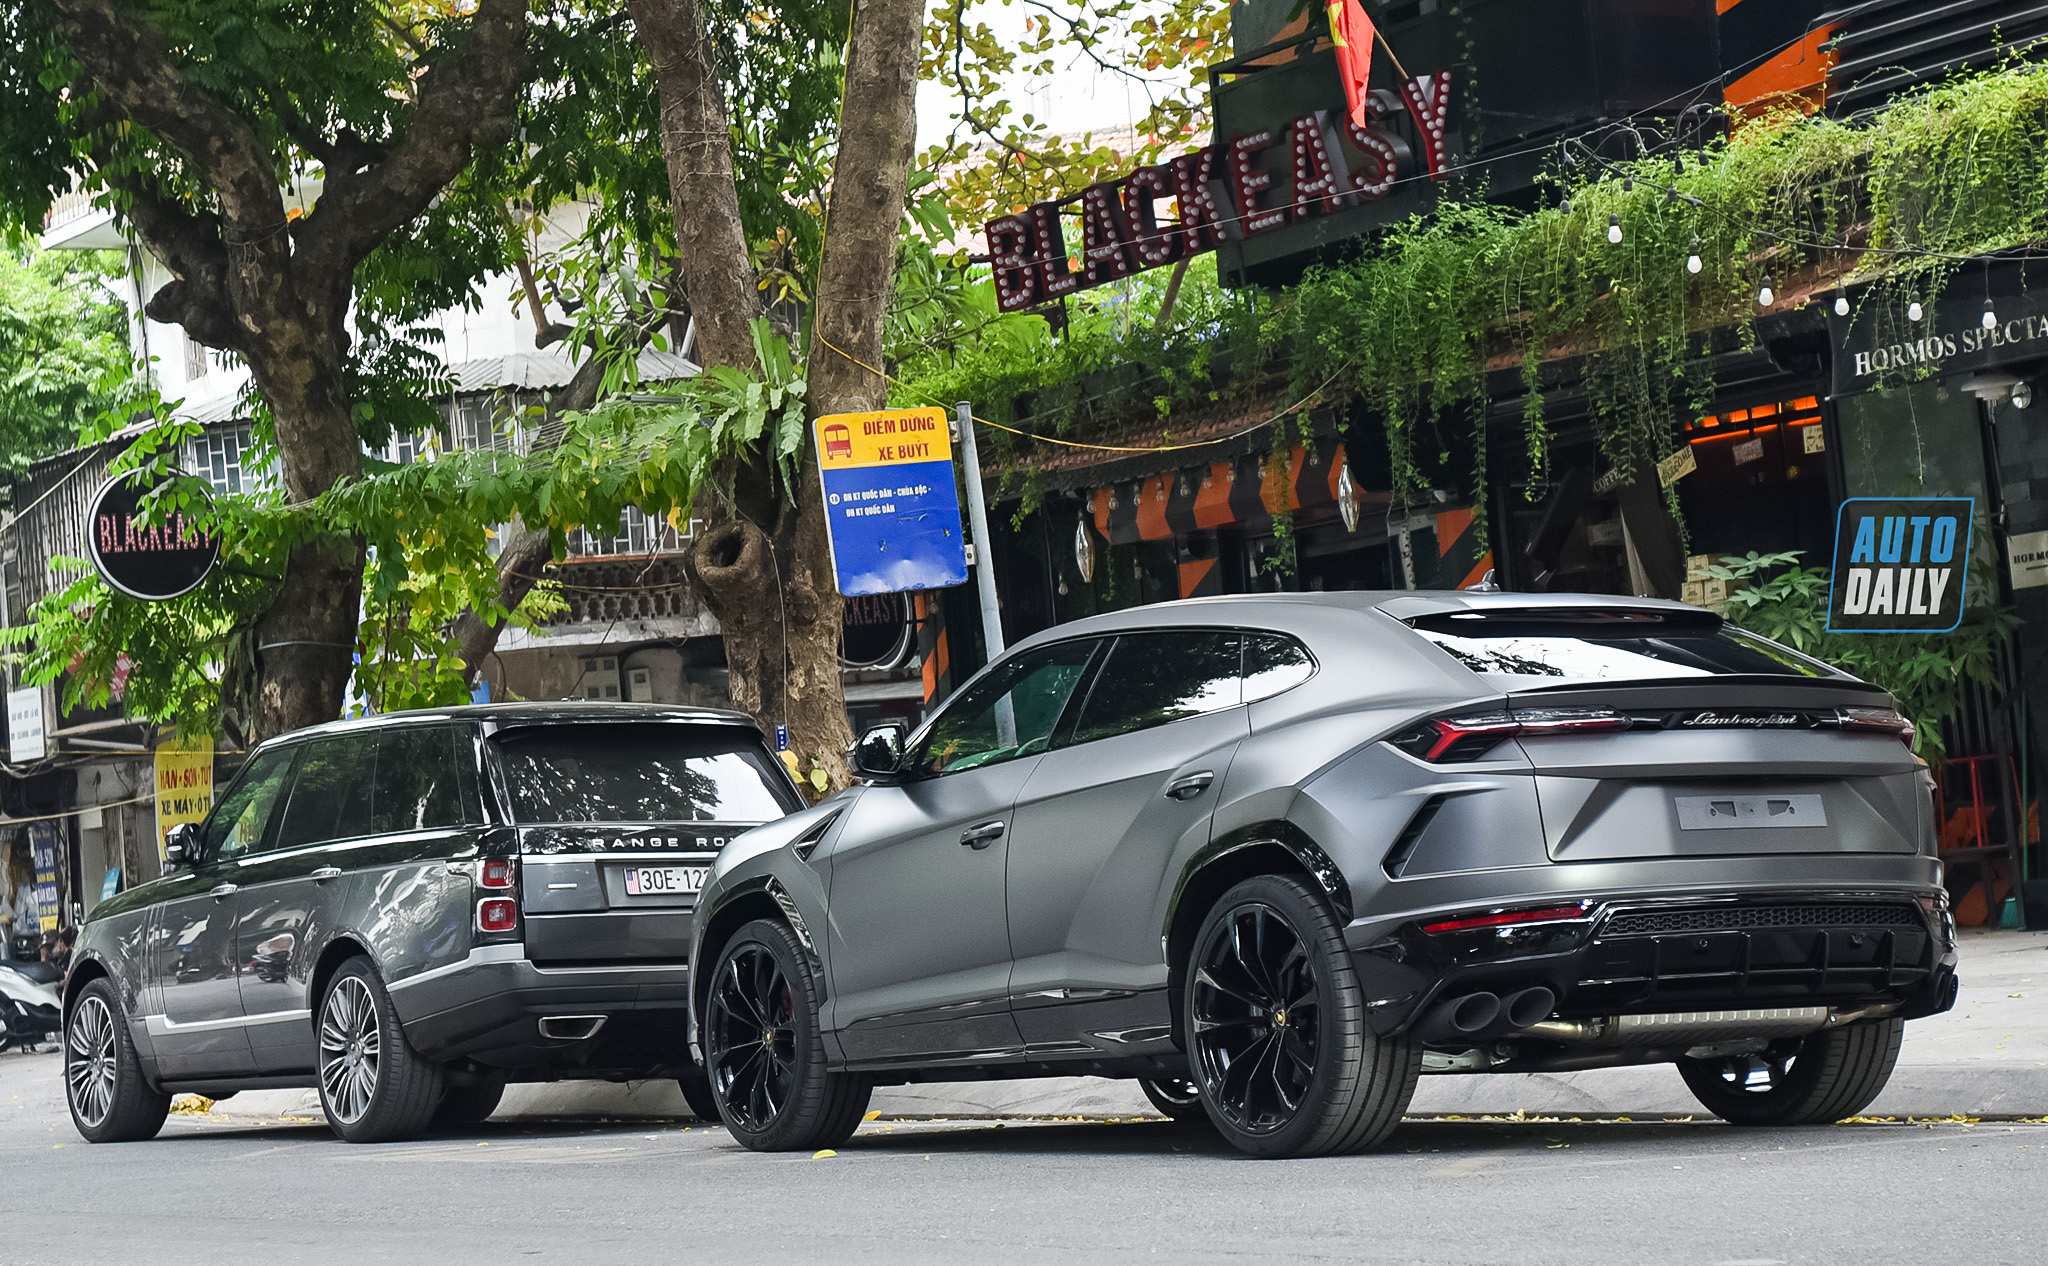 Siêu xe Lamborghini Urus với ngoại thất màu lạ mắt về Việt Nam adt-8140-copy.jpg